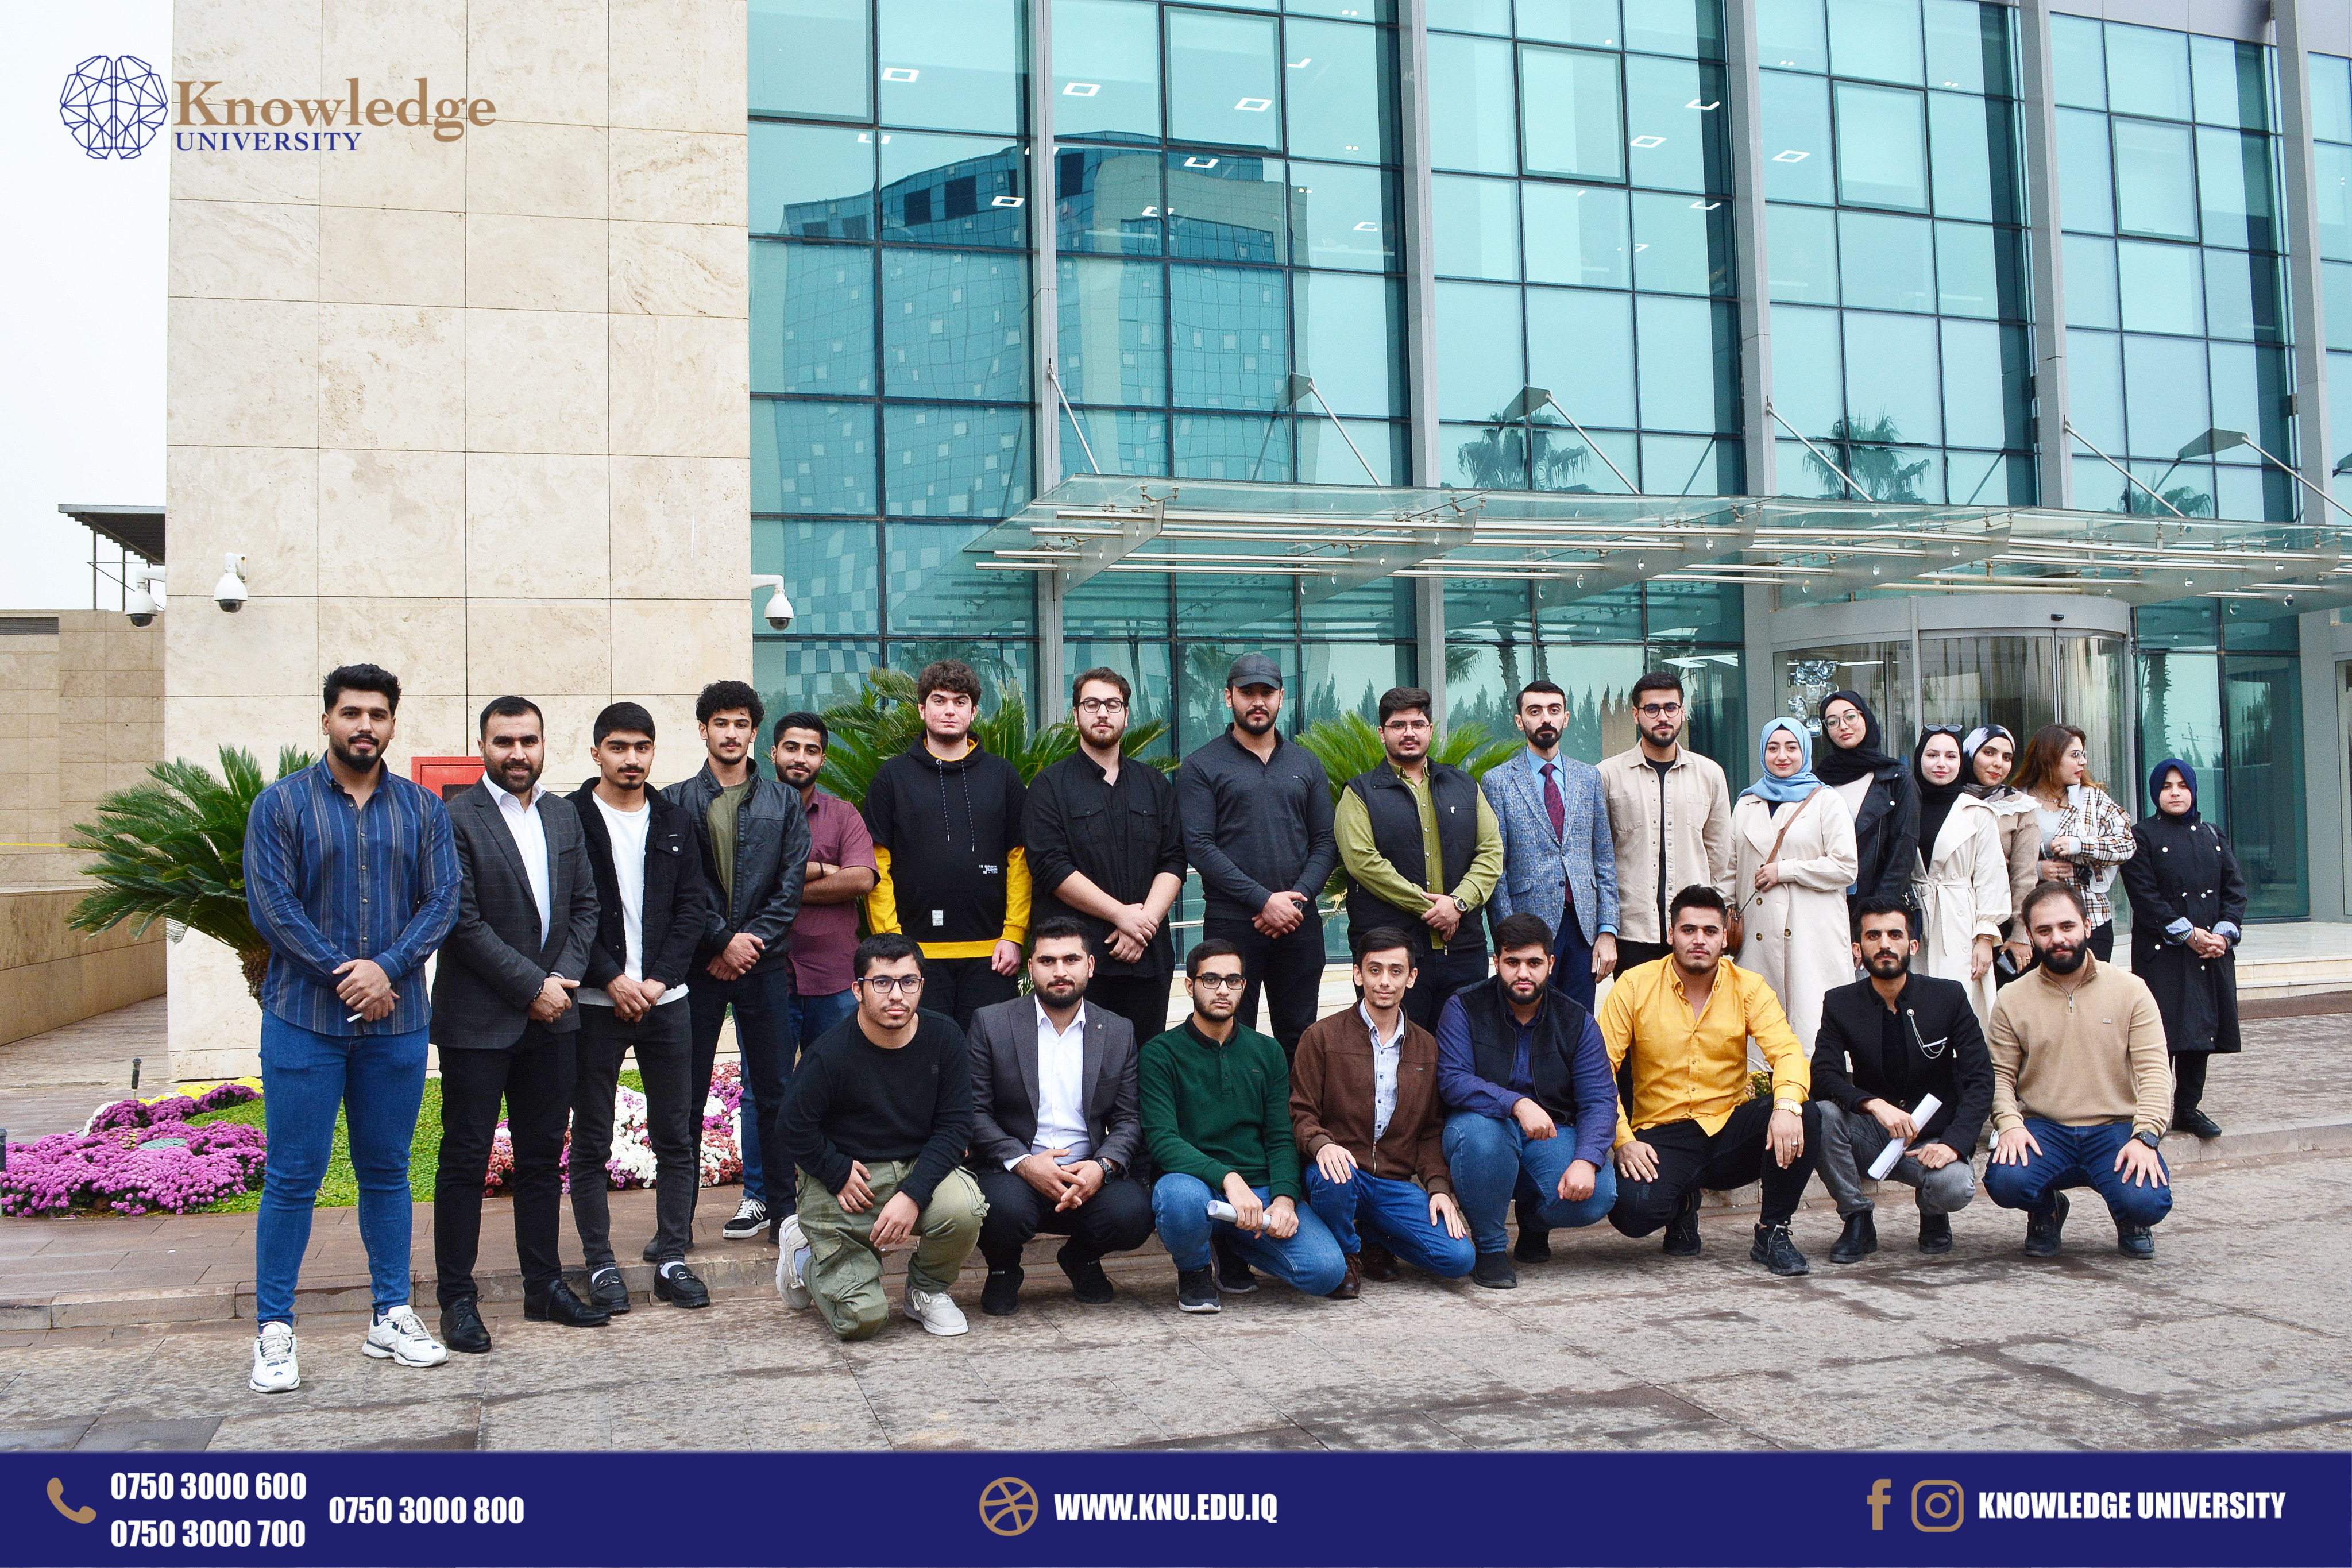  second year students from Knowledge University visit Korek Telecom company.